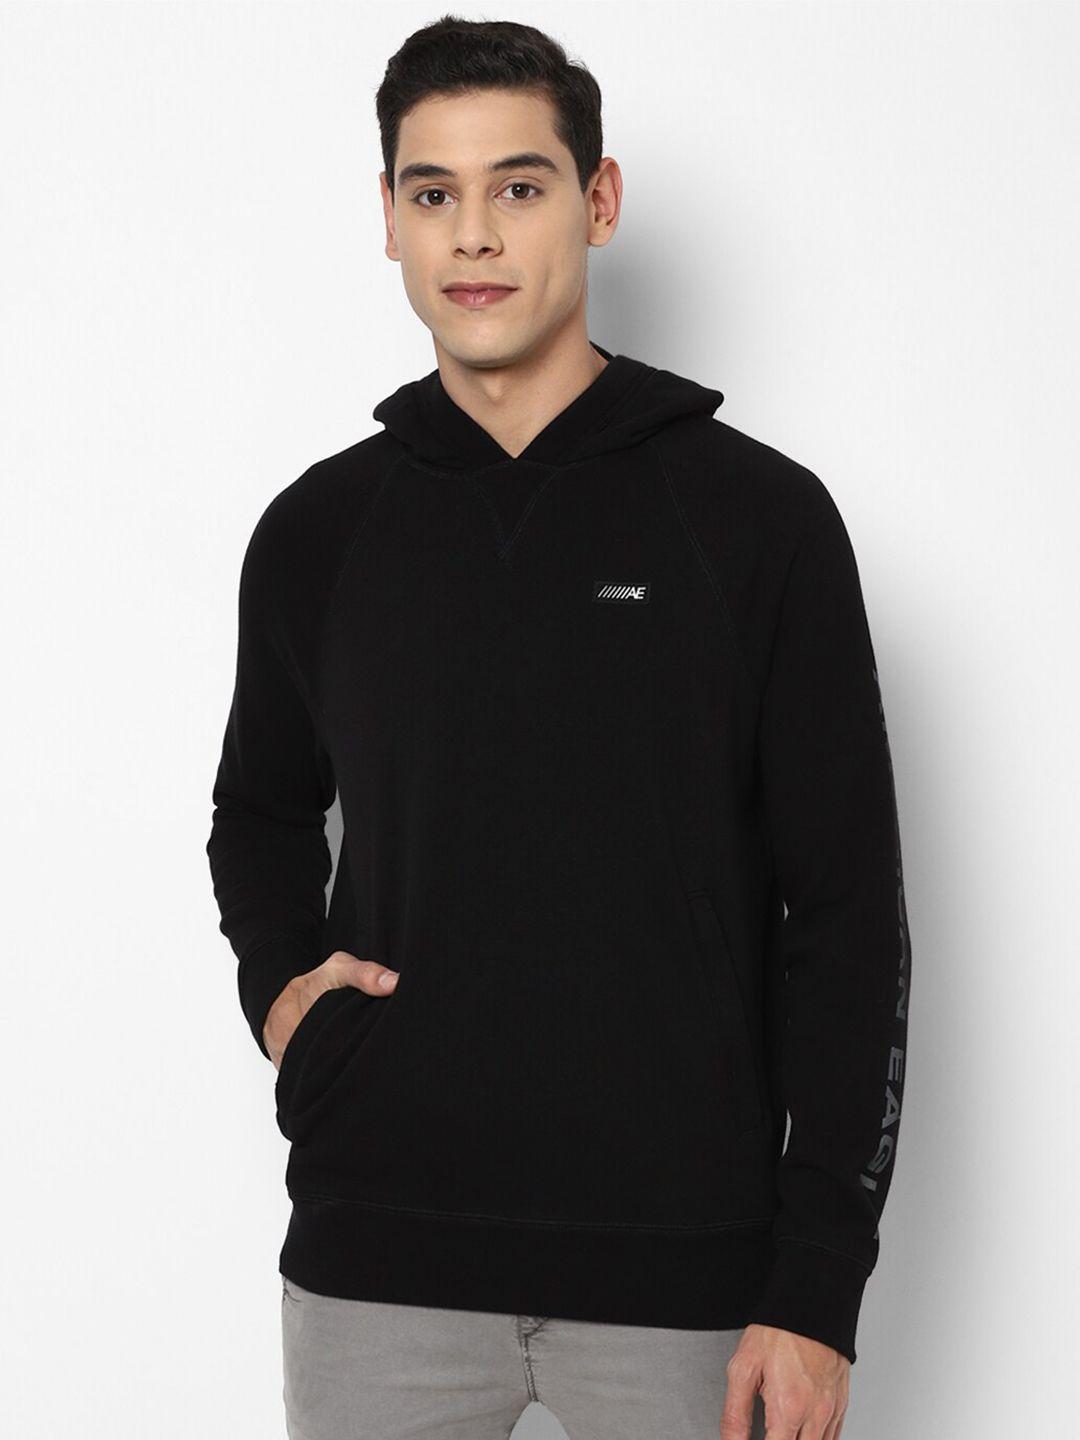 american-eagle-outfitters-men-black-hooded-sweatshirt